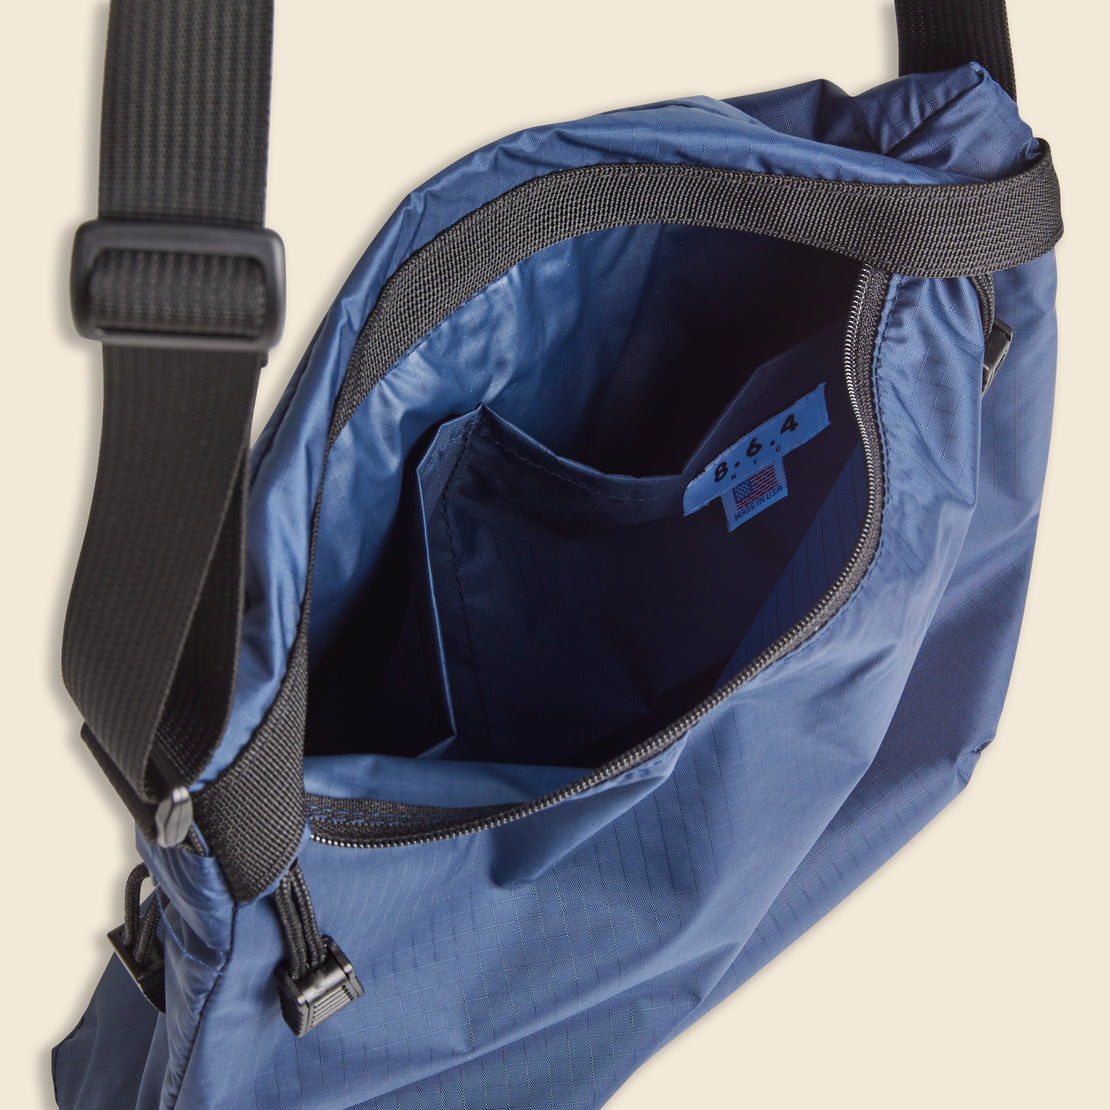 Nylon Crossbody - Navy/Black - 8.6.4 Design - STAG Provisions - W - Accessories - Bag